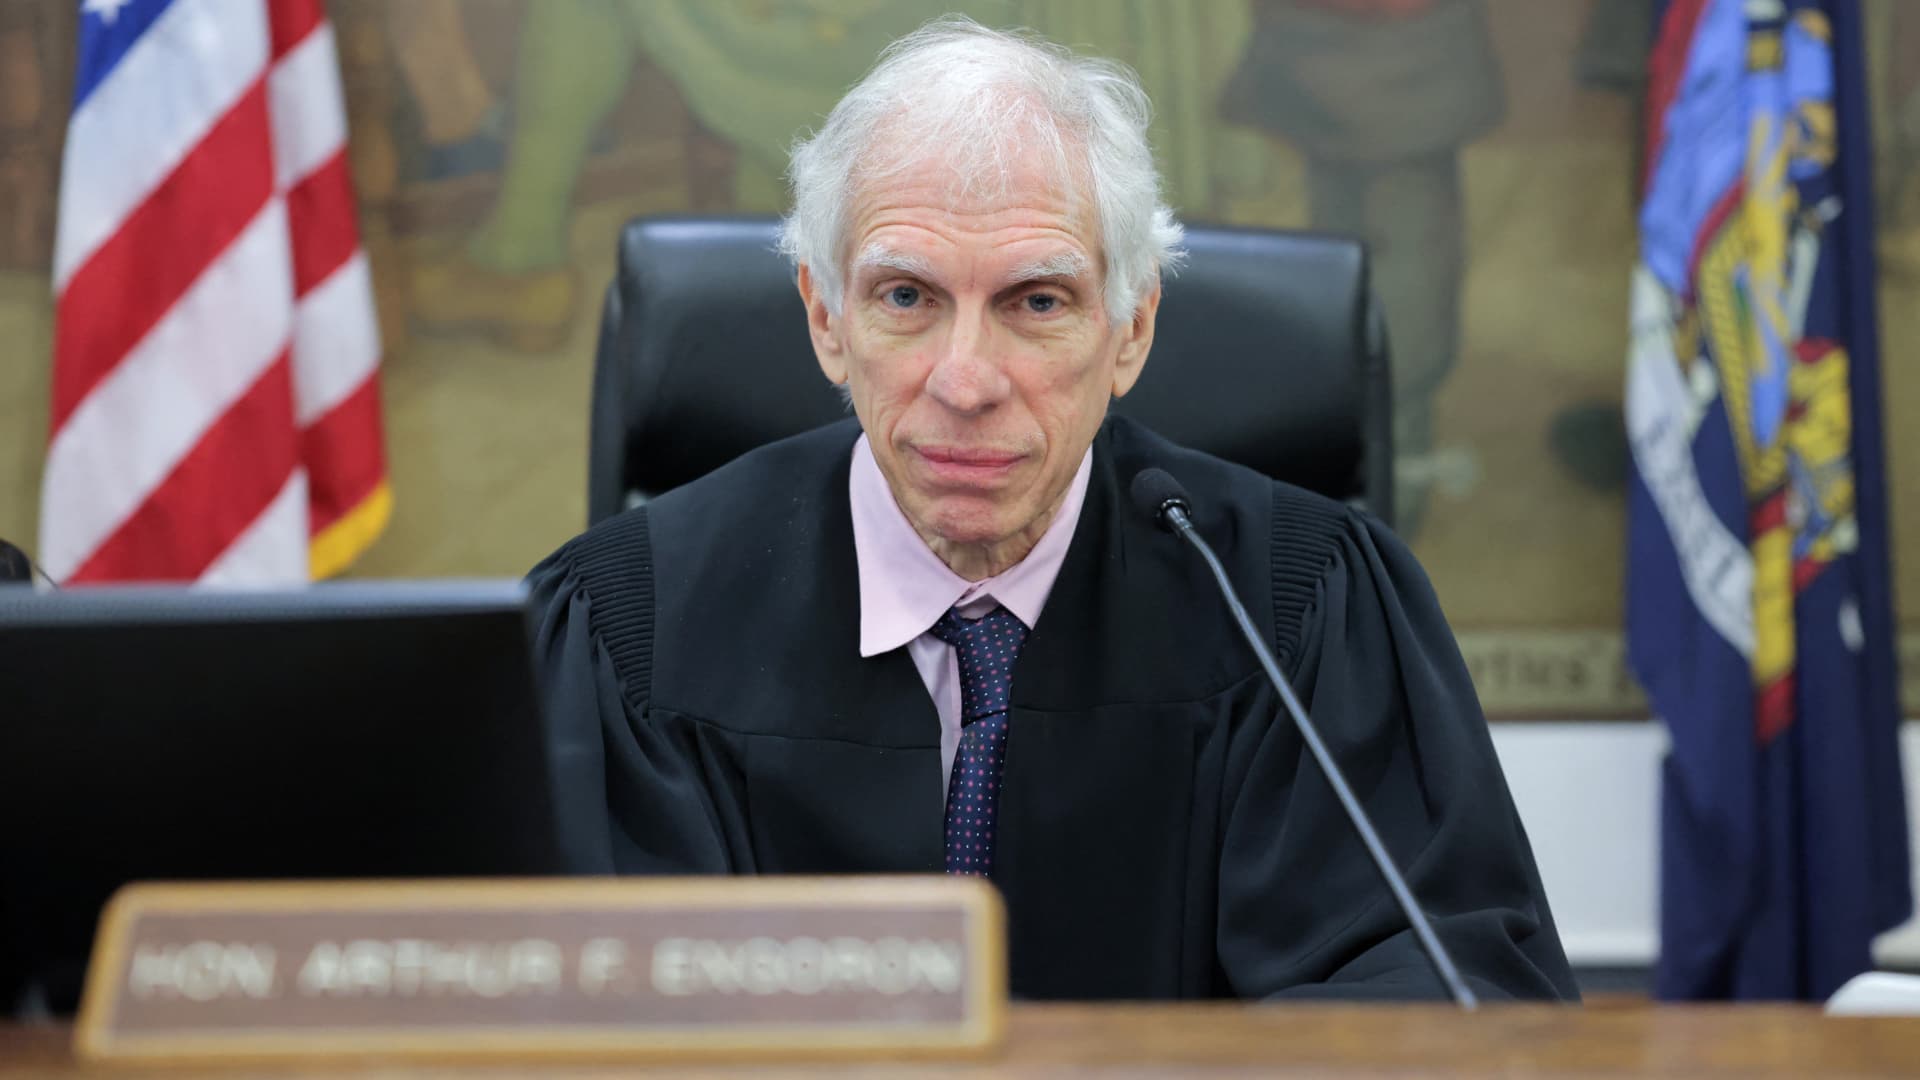 Trump fraud trial adjourned, all eyes now on Judge Engoron